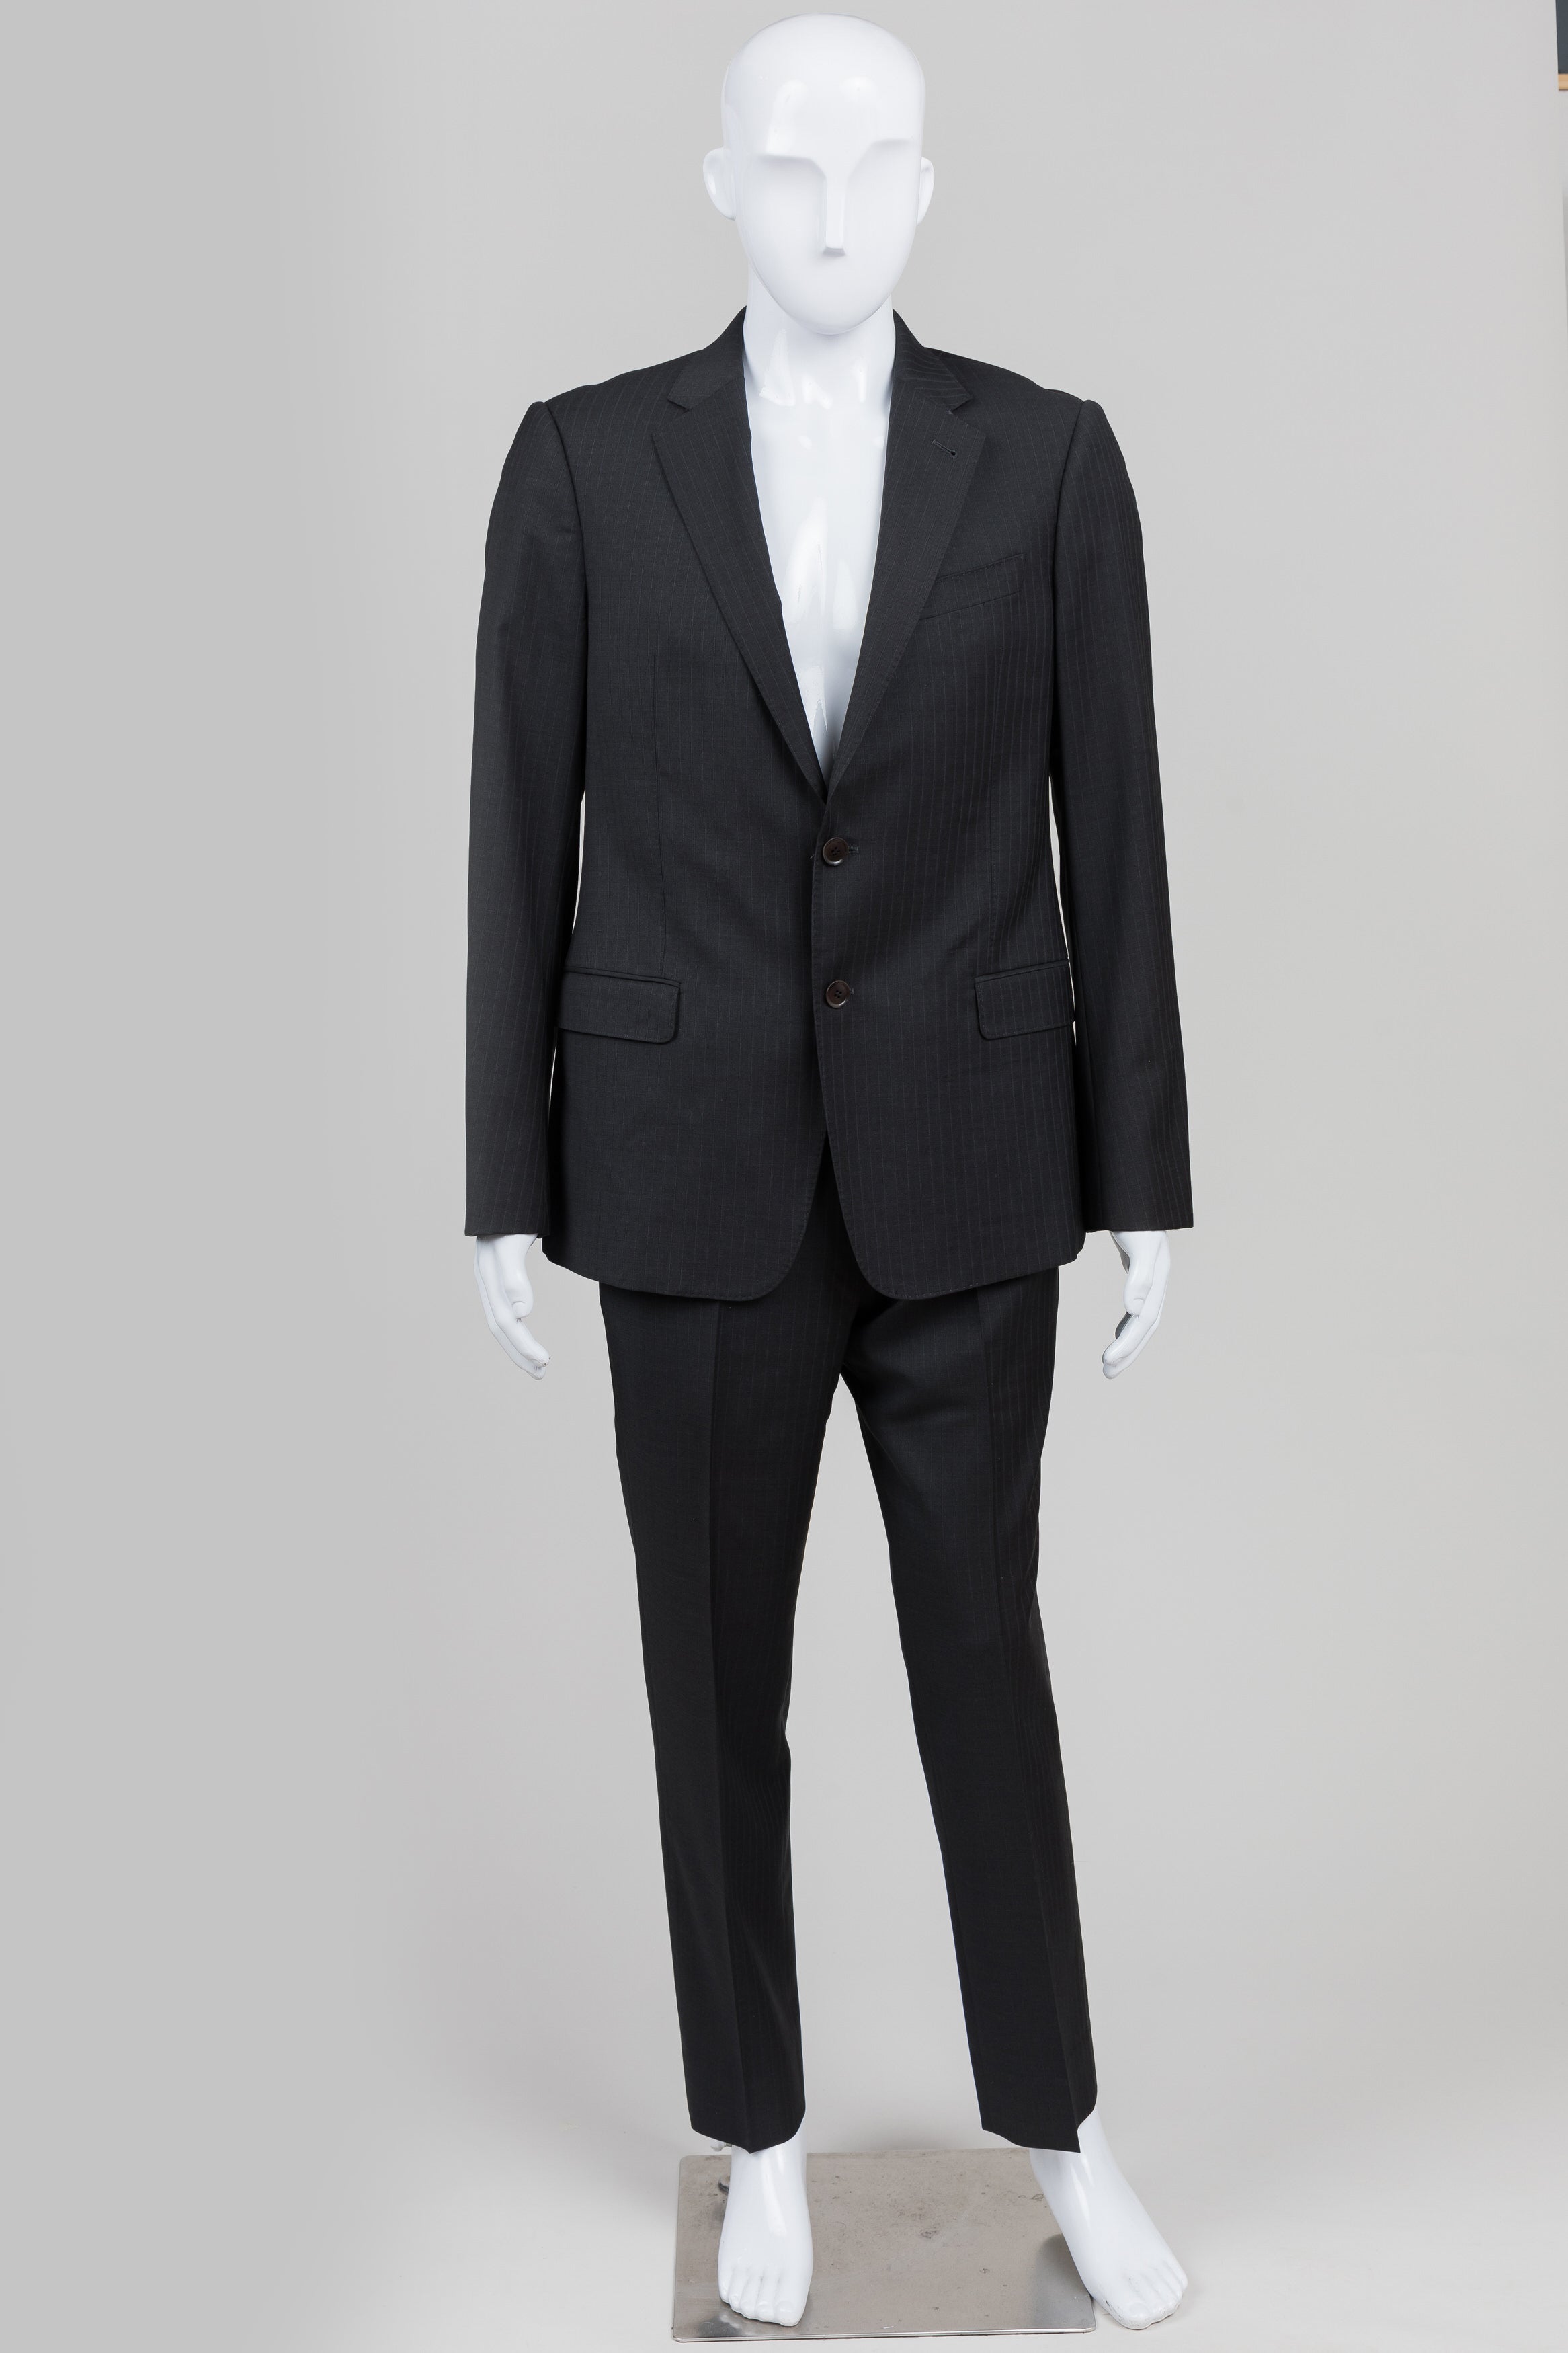 Armani Collezioni Charcoal Pinstripe Suit (40R)